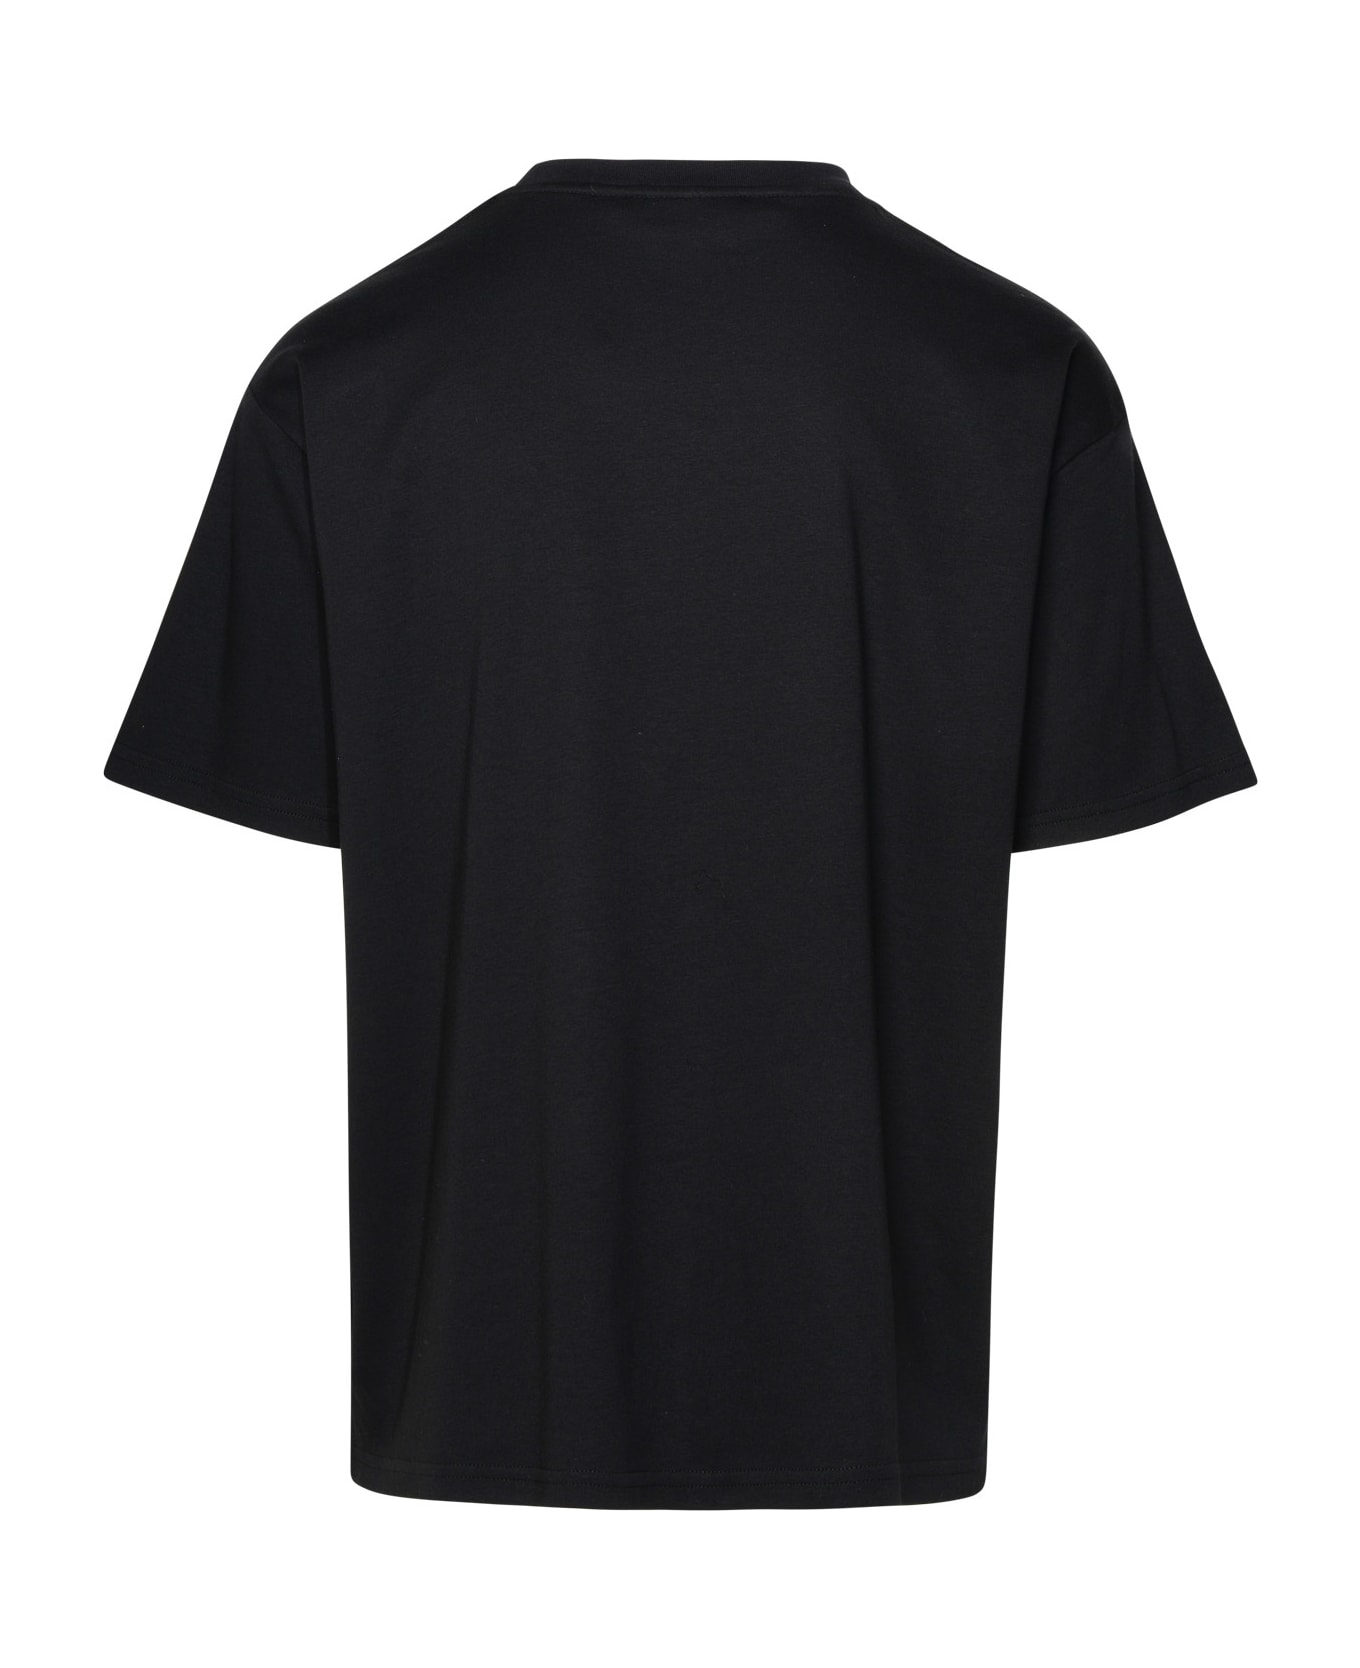 GCDS Black Cotton T-shirt - Black シャツ